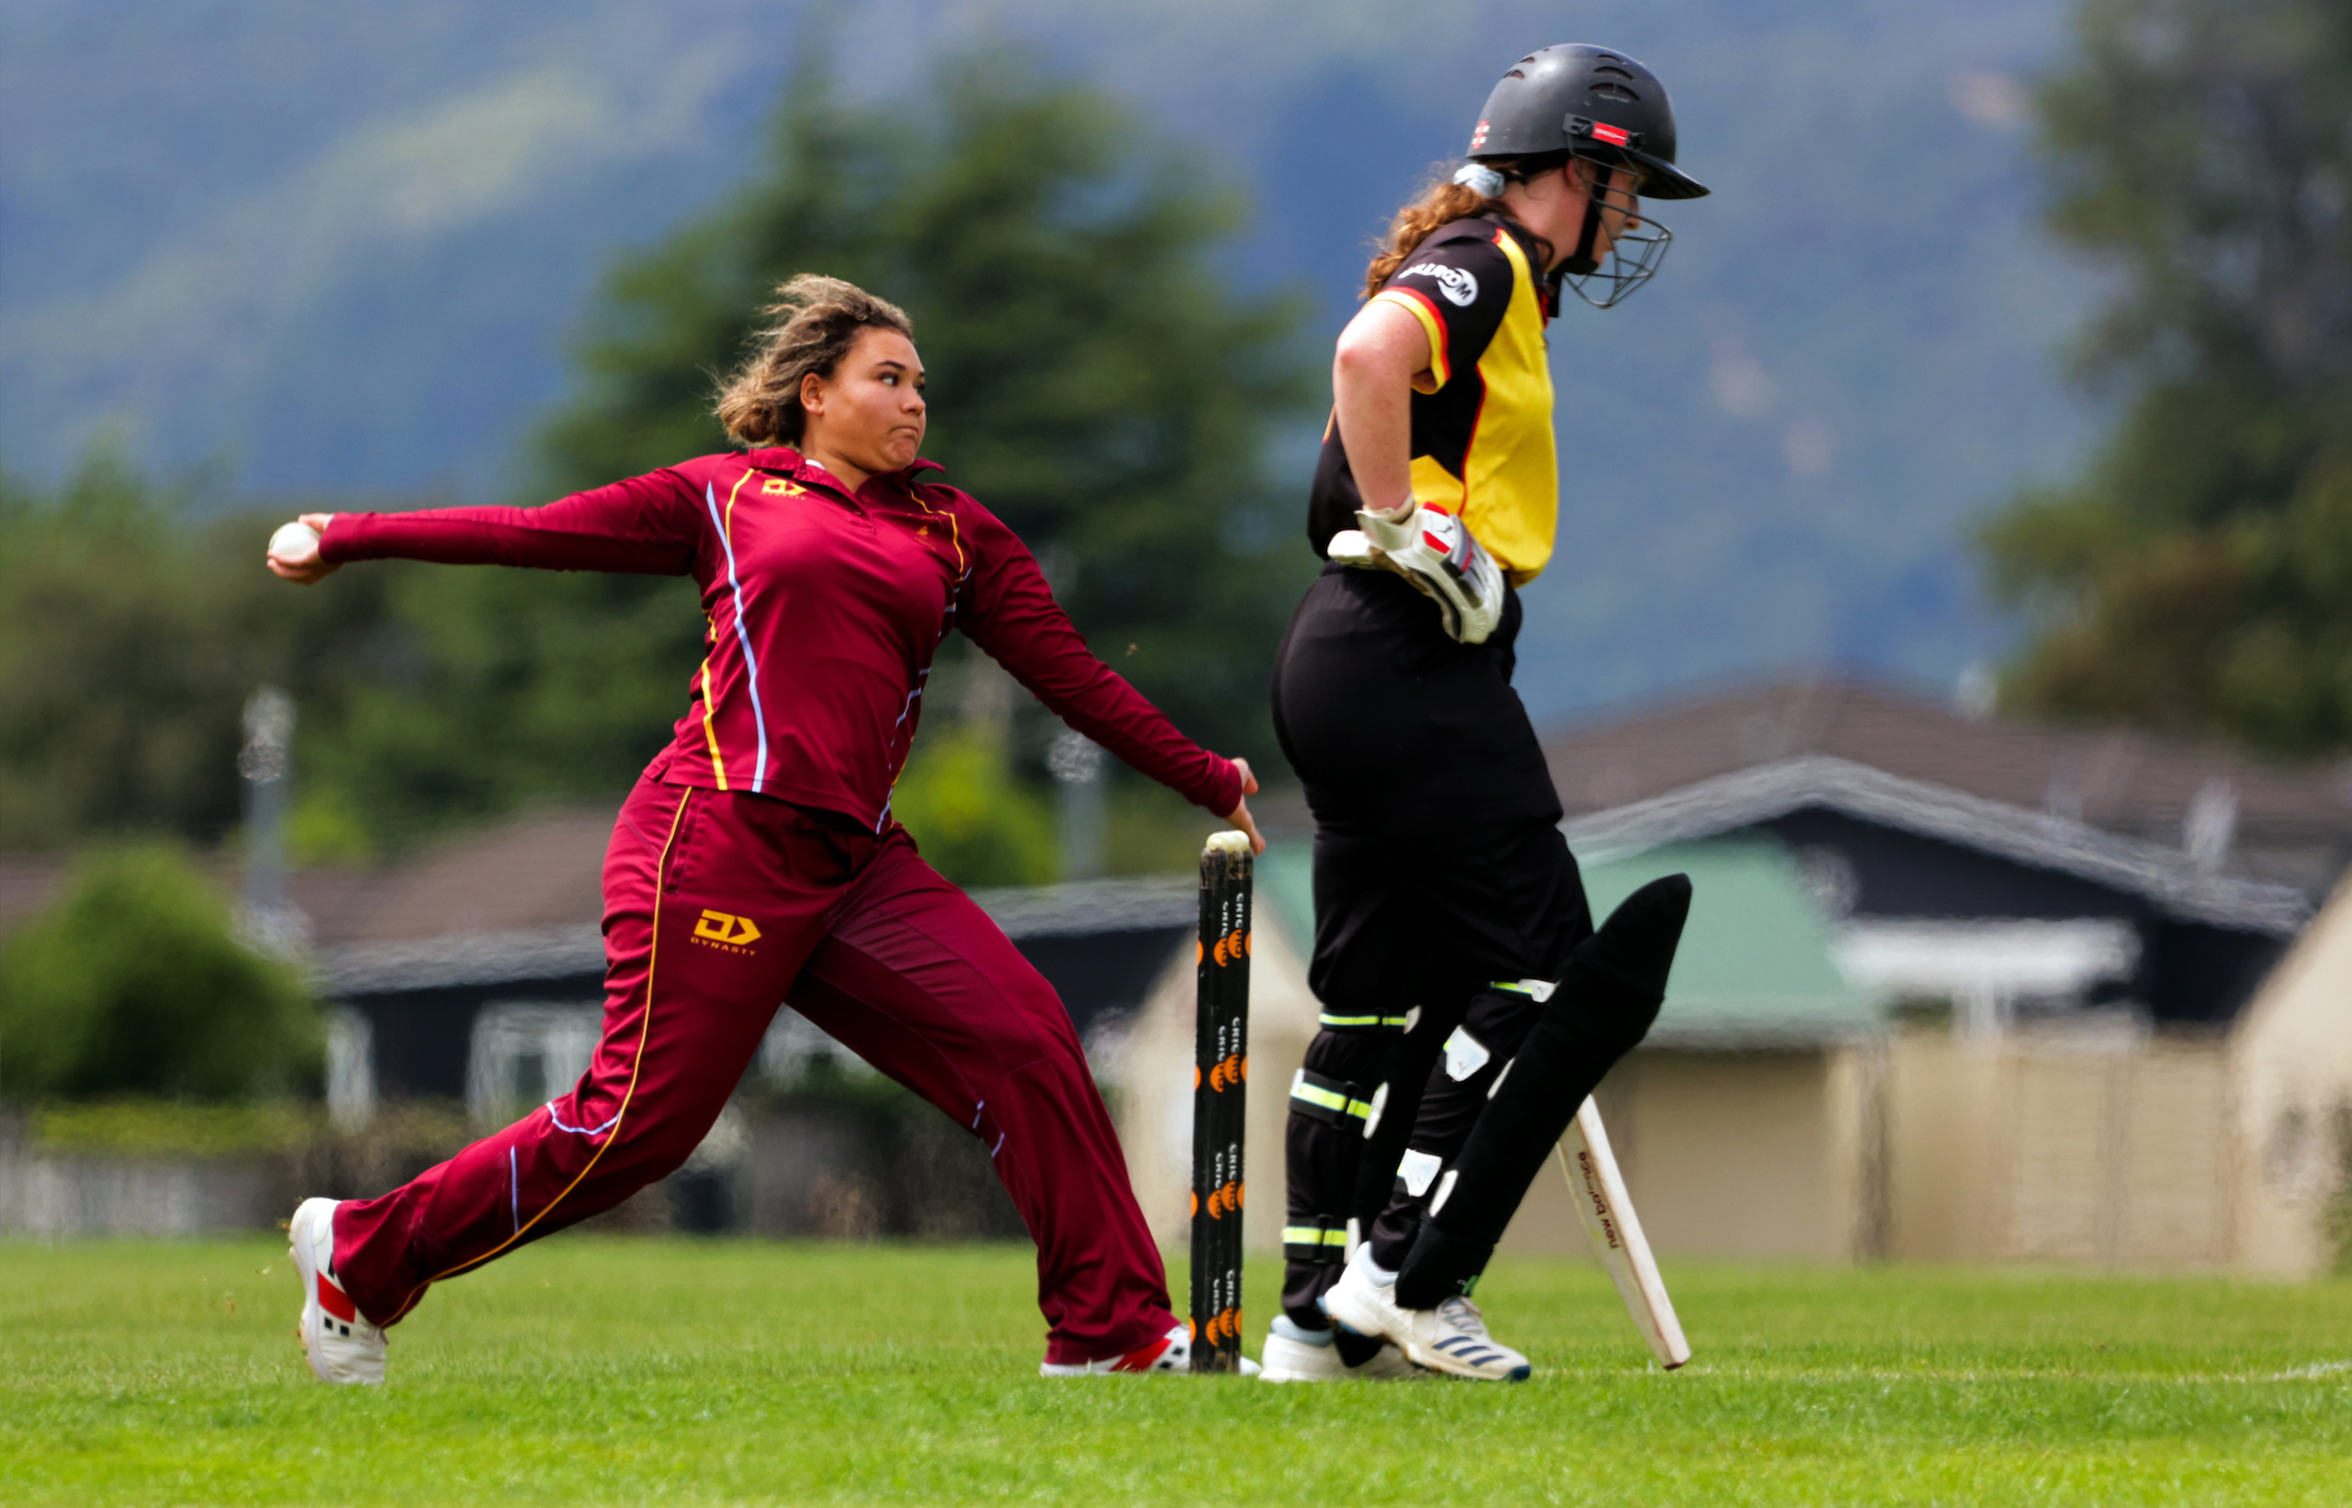 Women's Cricket, Wellington bowling action shot